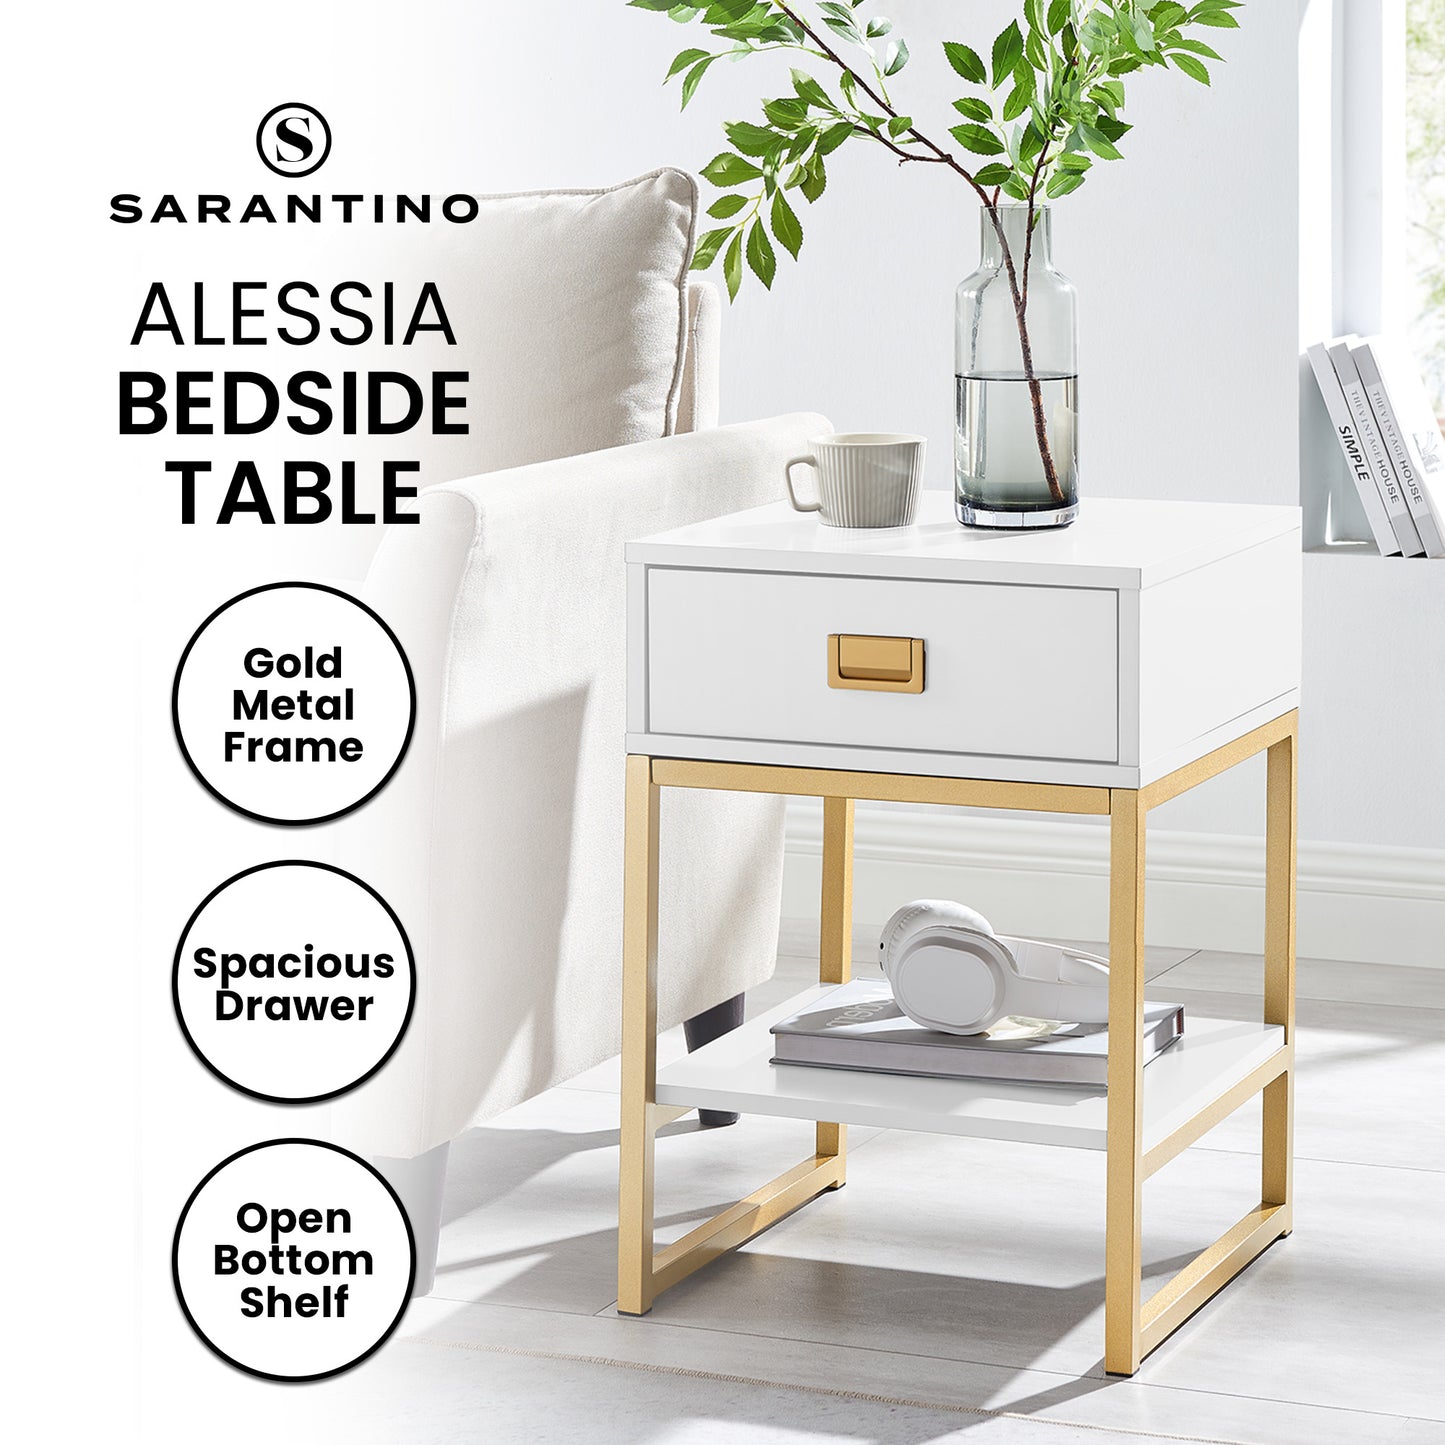 Sarantino Alessia Bedside Table - White/Gold